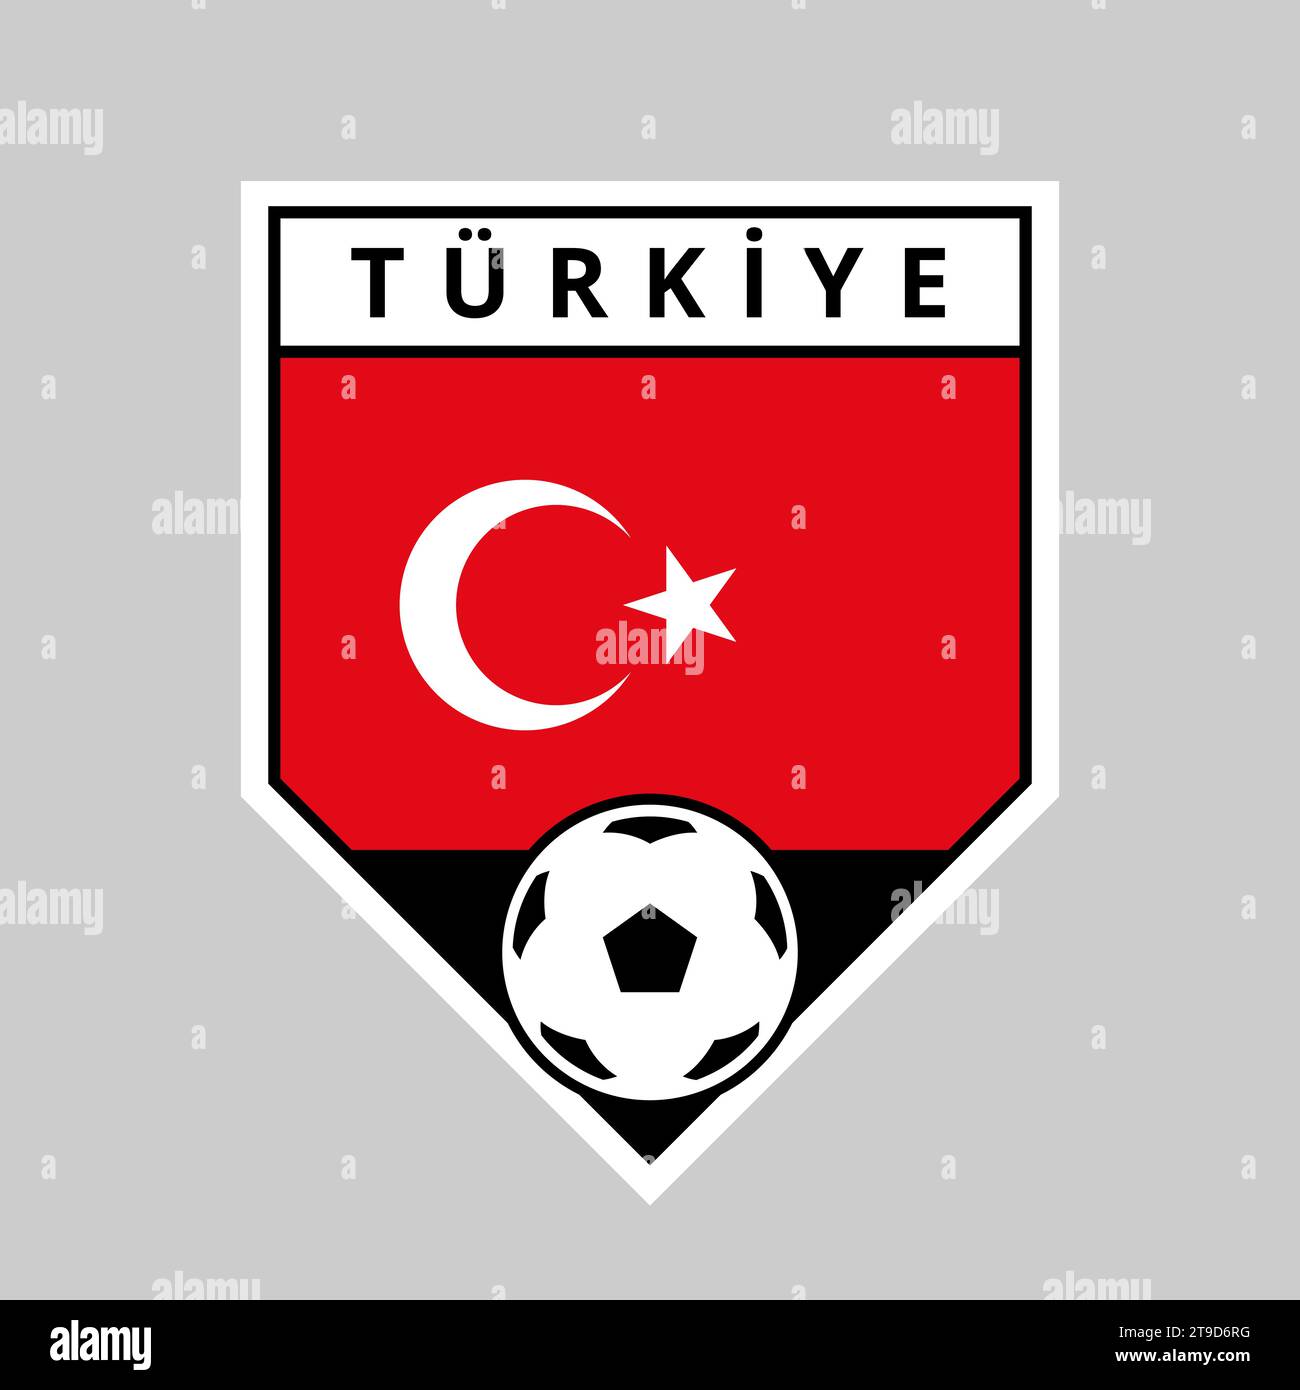 Illustration Of Angled Shield Team Badge Of Turkiye For Football Tournament Stock Vector Image